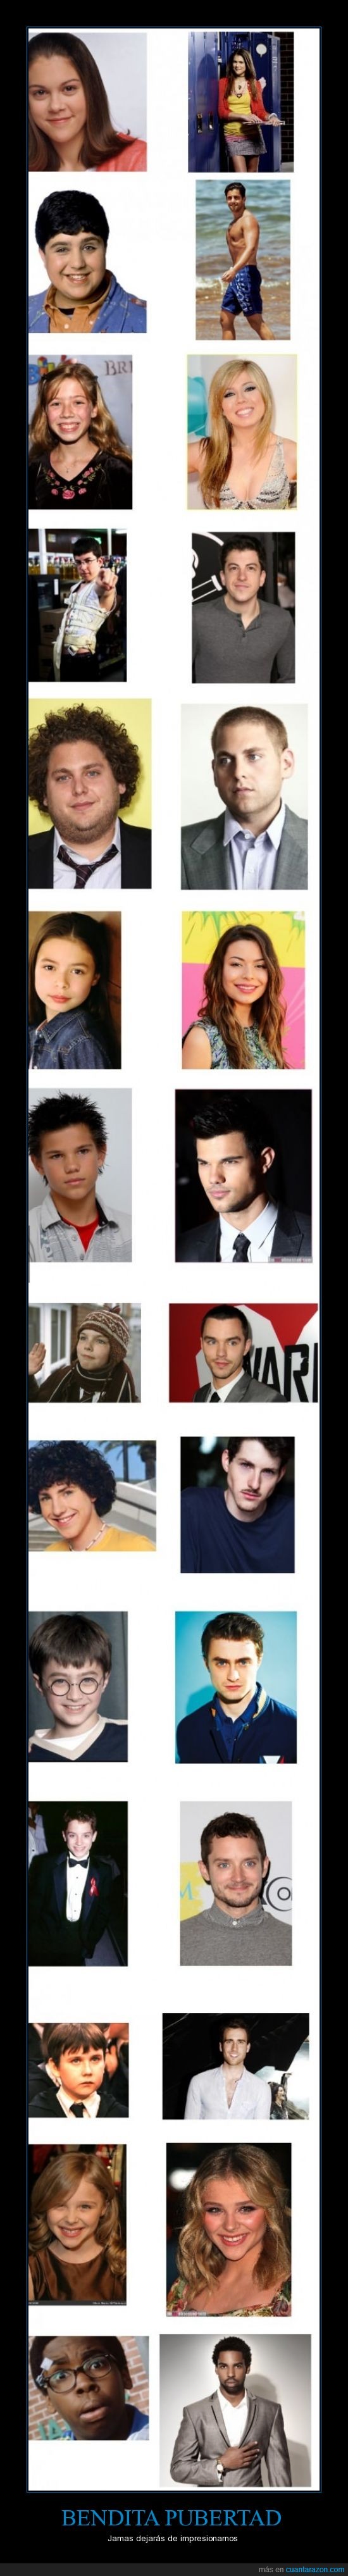 famosos,pubertad,harry potter,josh,cookie,sam